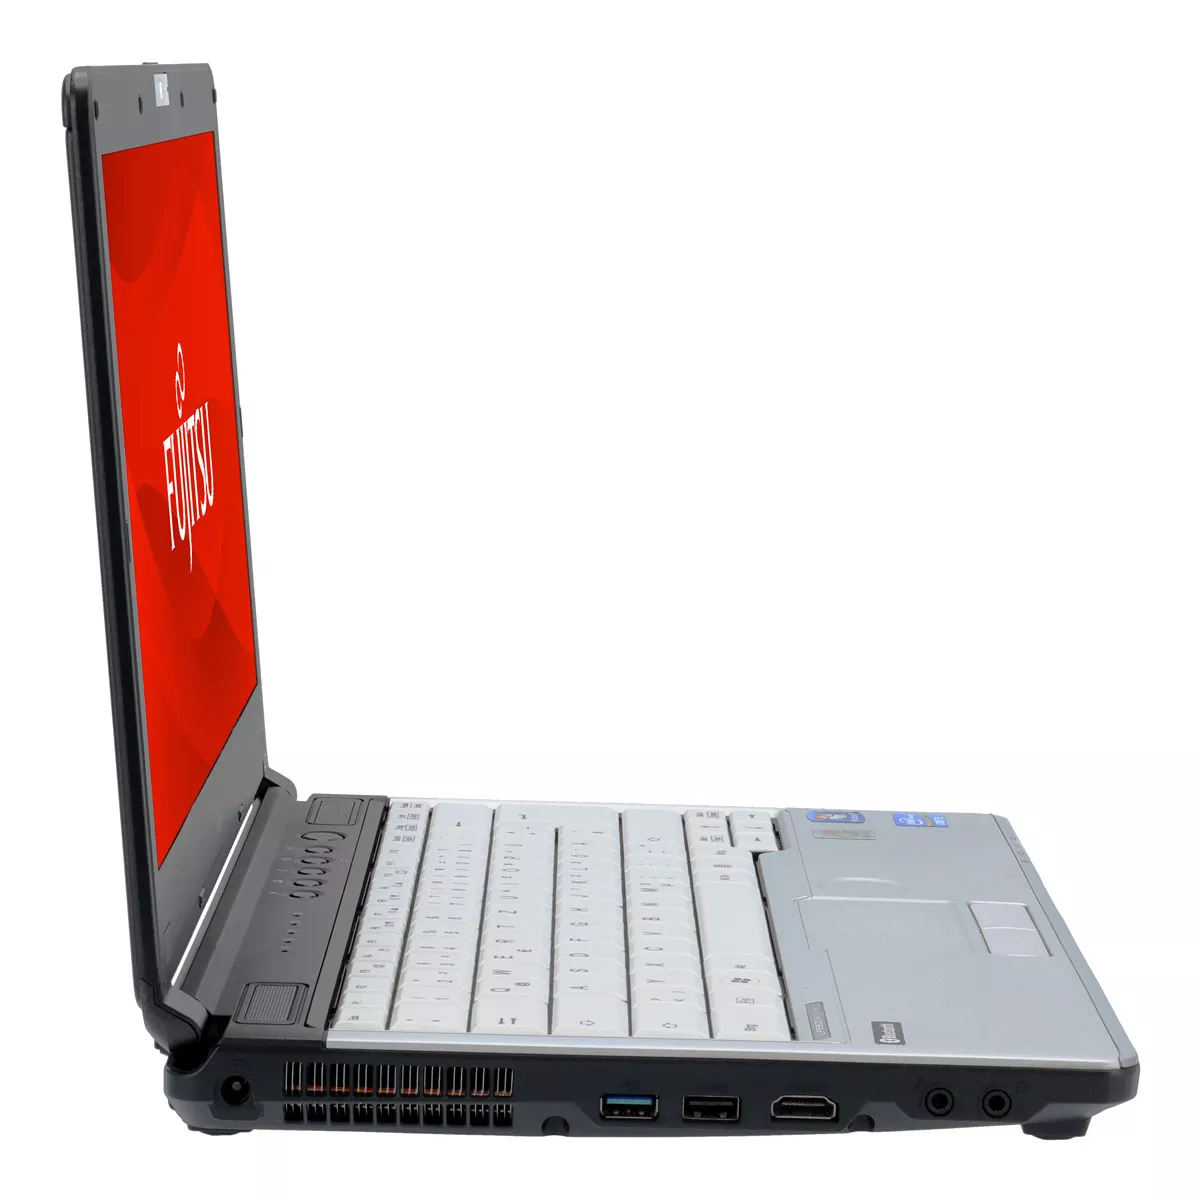 Fujitsu Lifebook S761 Core i5 2520M 2,50 GHz 128 GB SSD Webcam A+